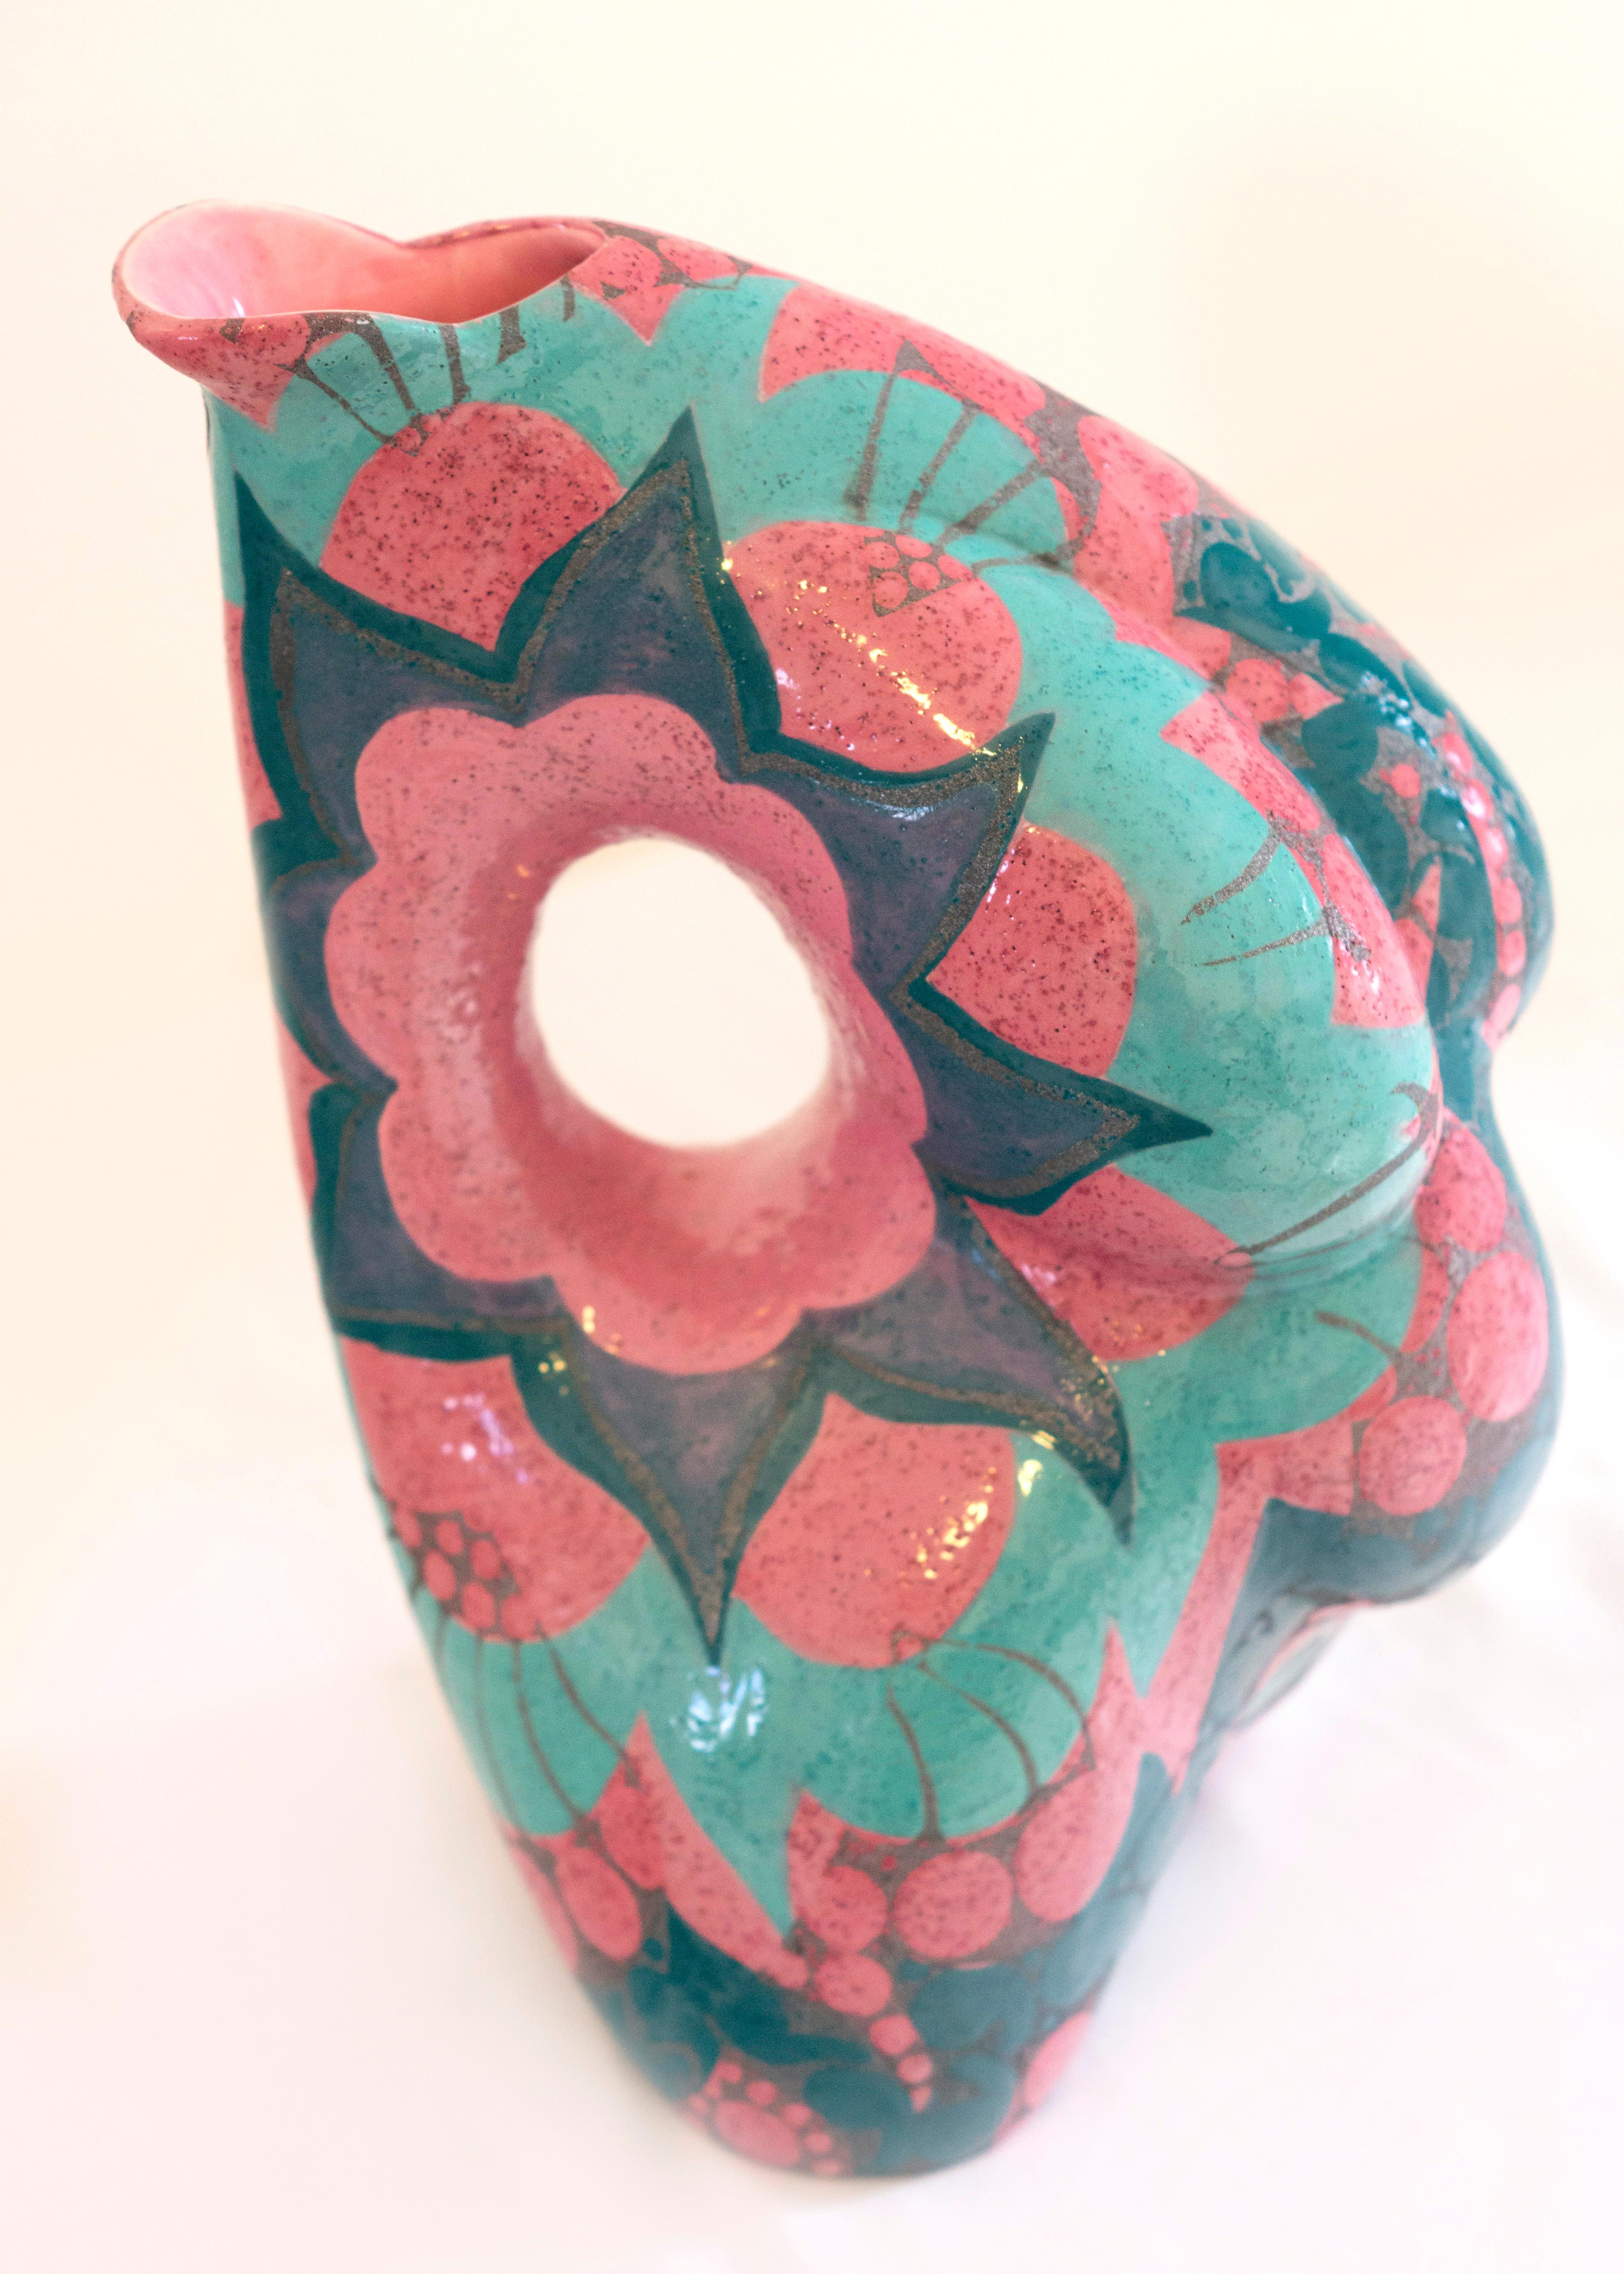 PAISLEY - Abstract Slip Cast Ceramic Fine Art Sculpture Artist Signed 1996